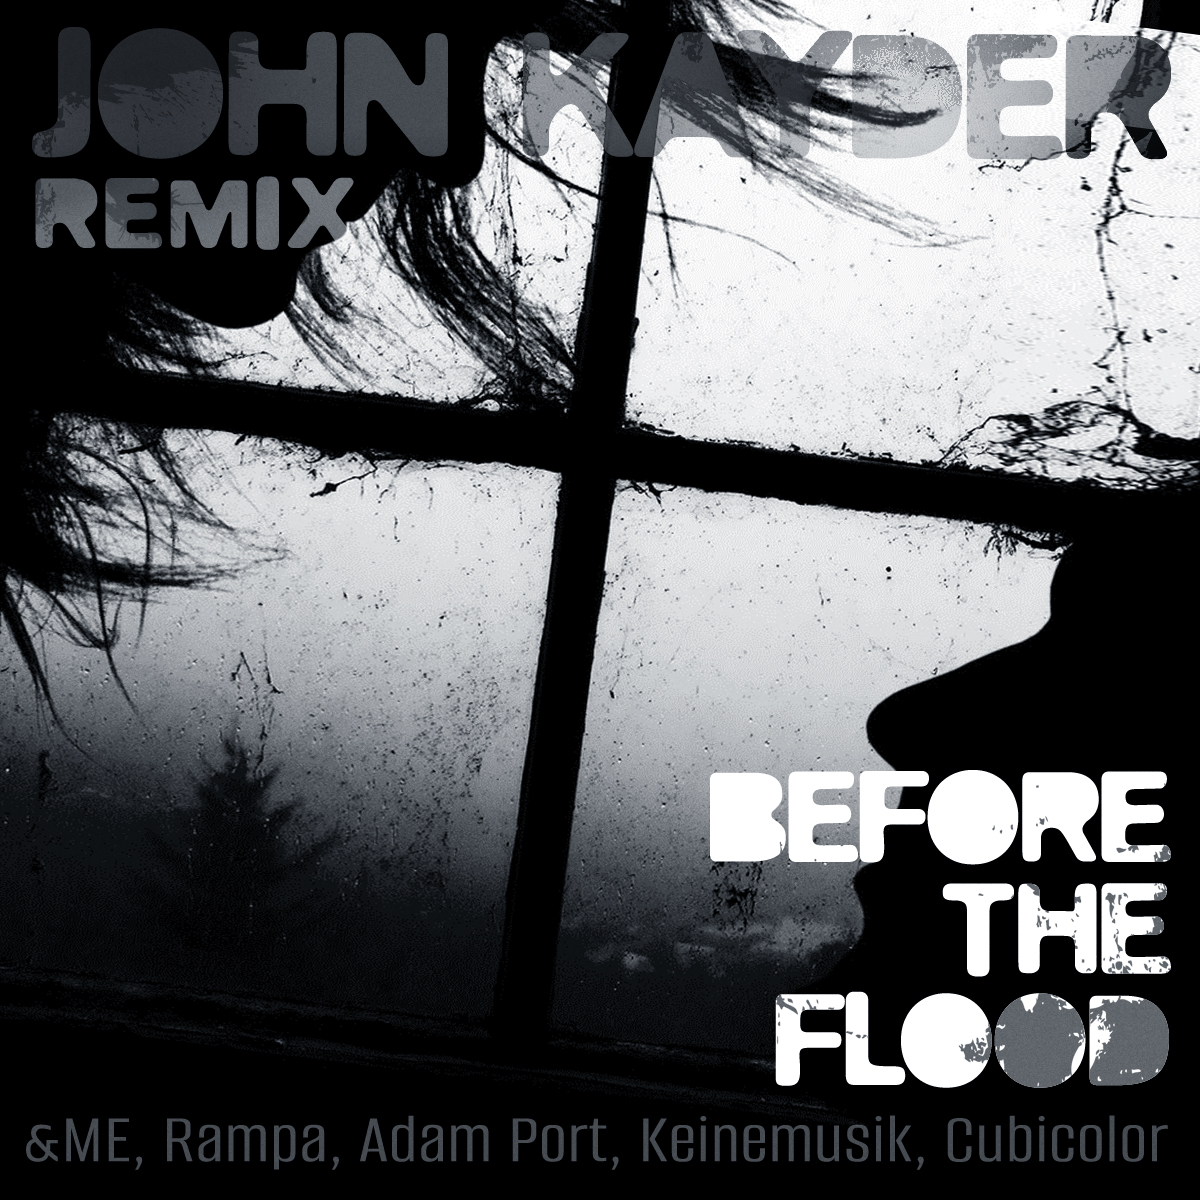 Andme, Rampa, Adam Port, Keinemusik, Cubicolor - Before The Flood (john Kayder Remix) on Revolution Radio